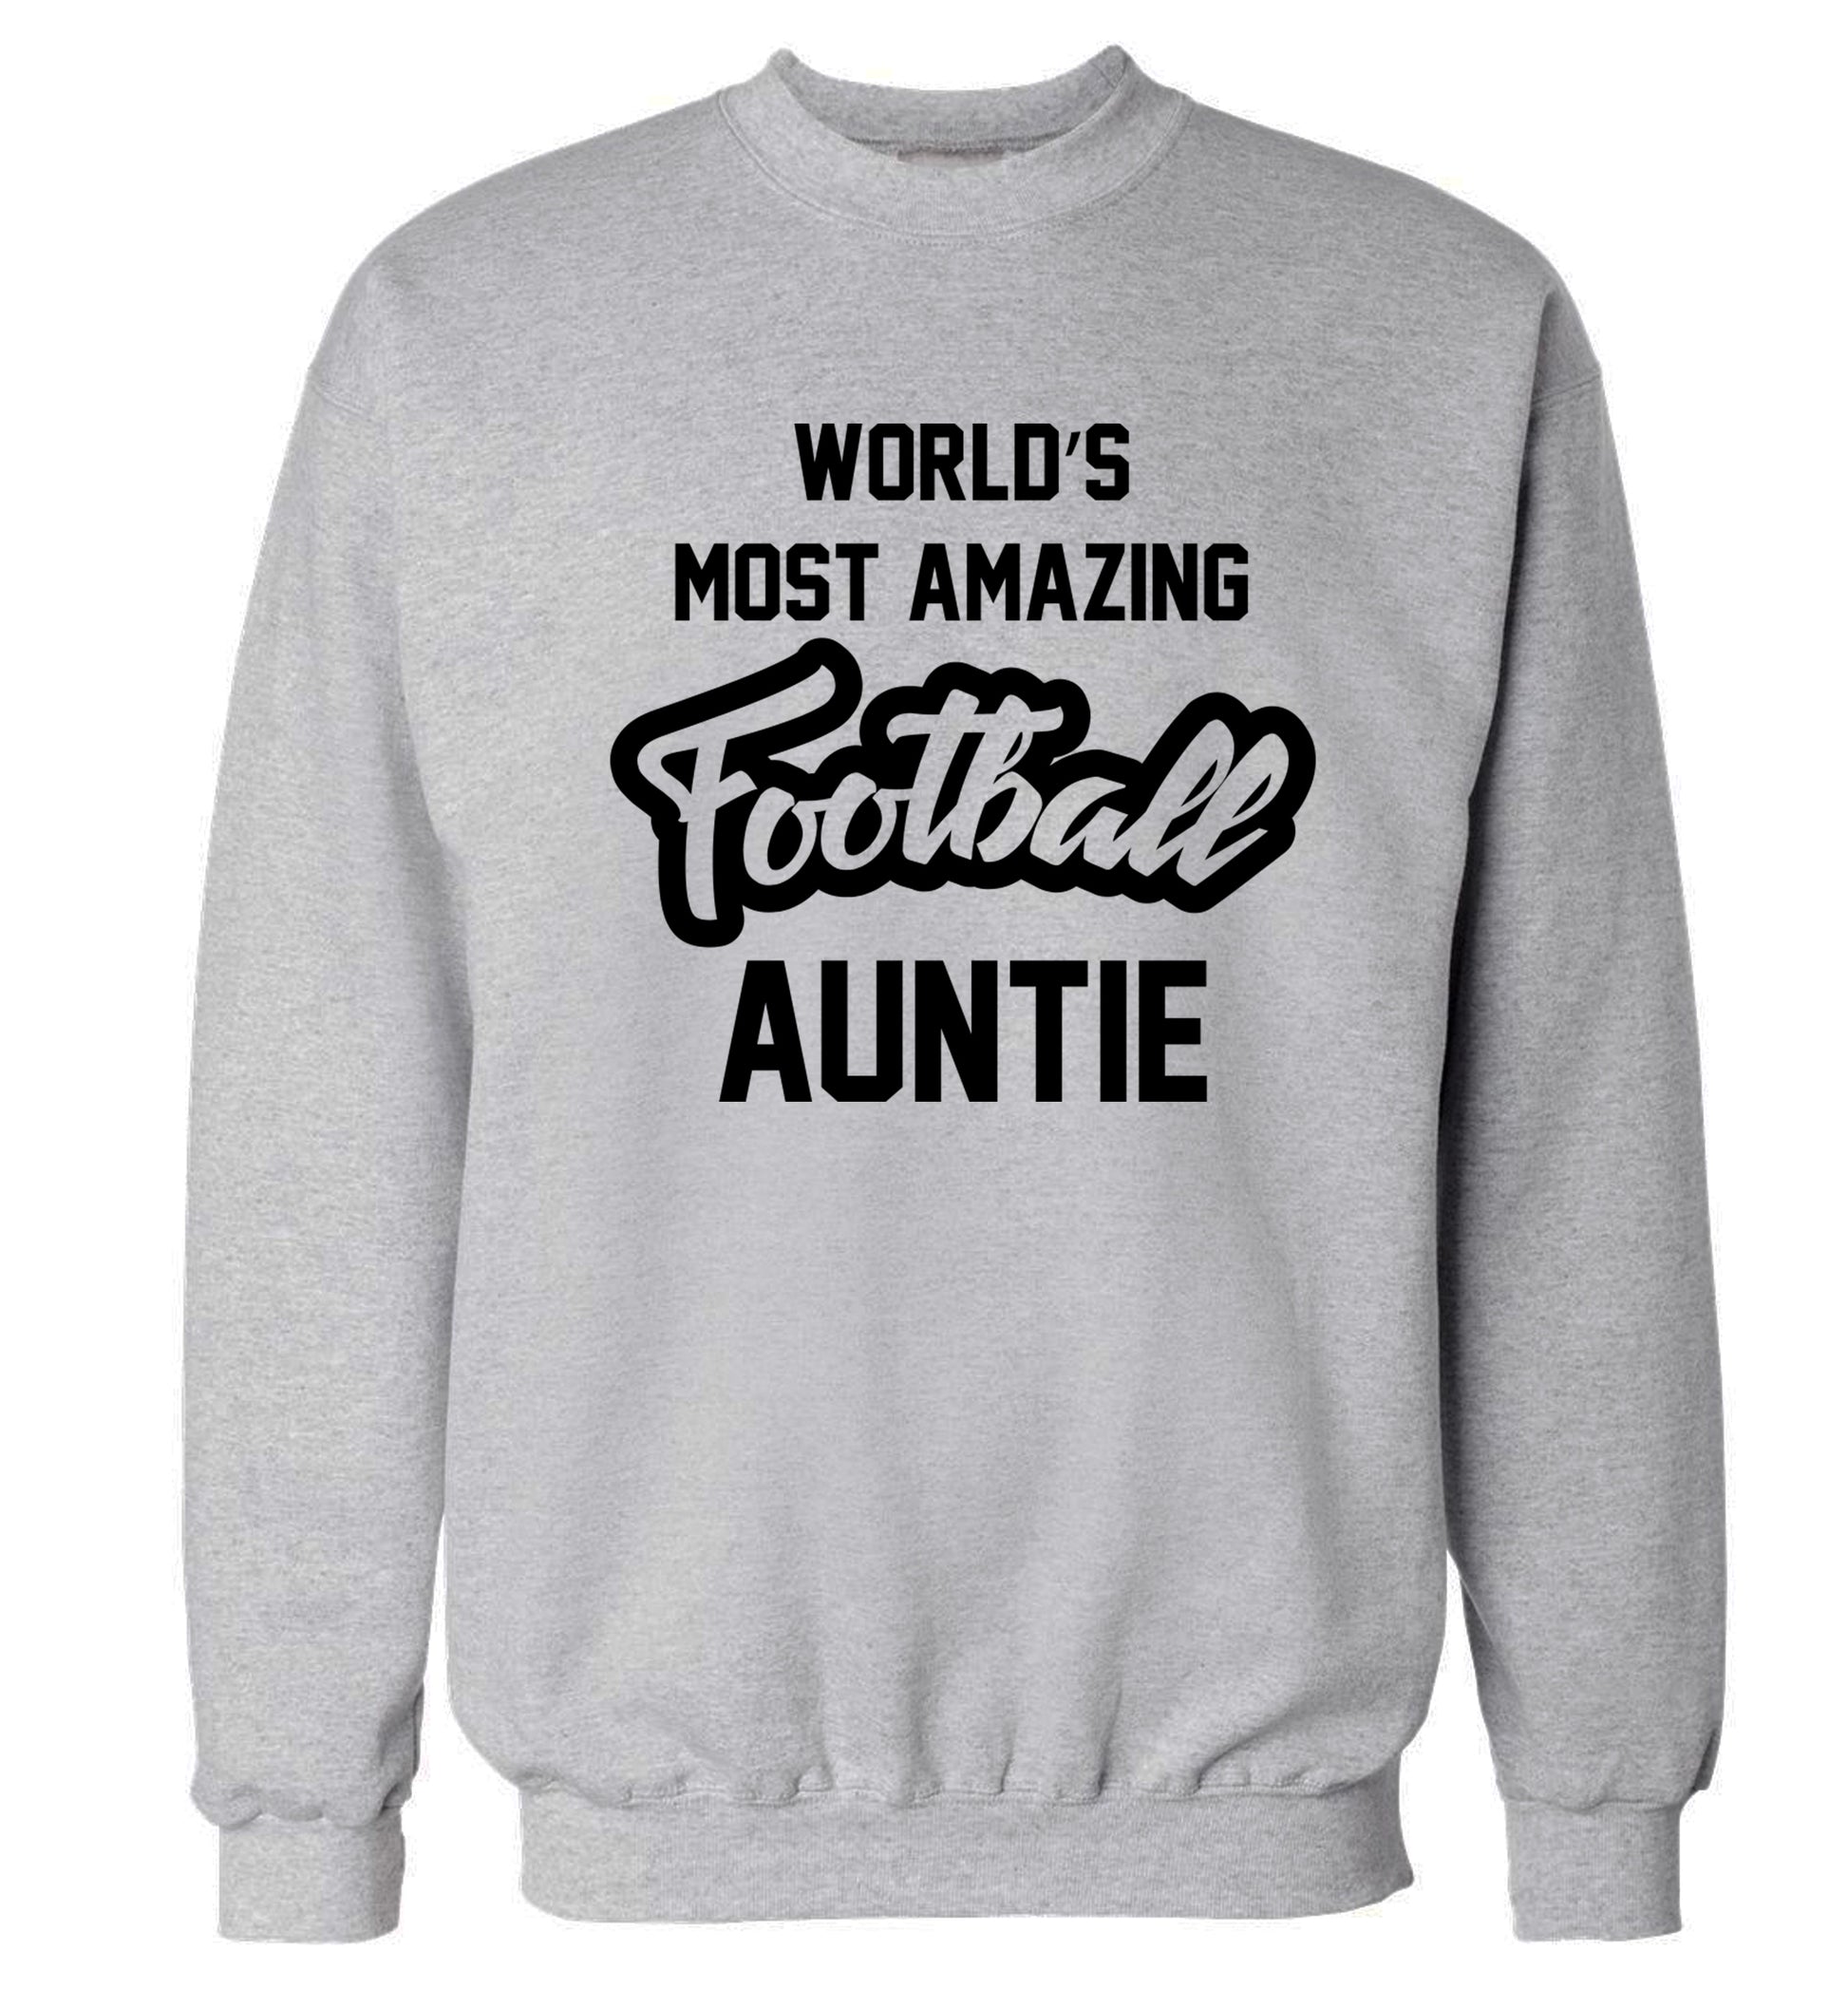 Worlds most amazing football auntie Adult's unisexgrey Sweater 2XL